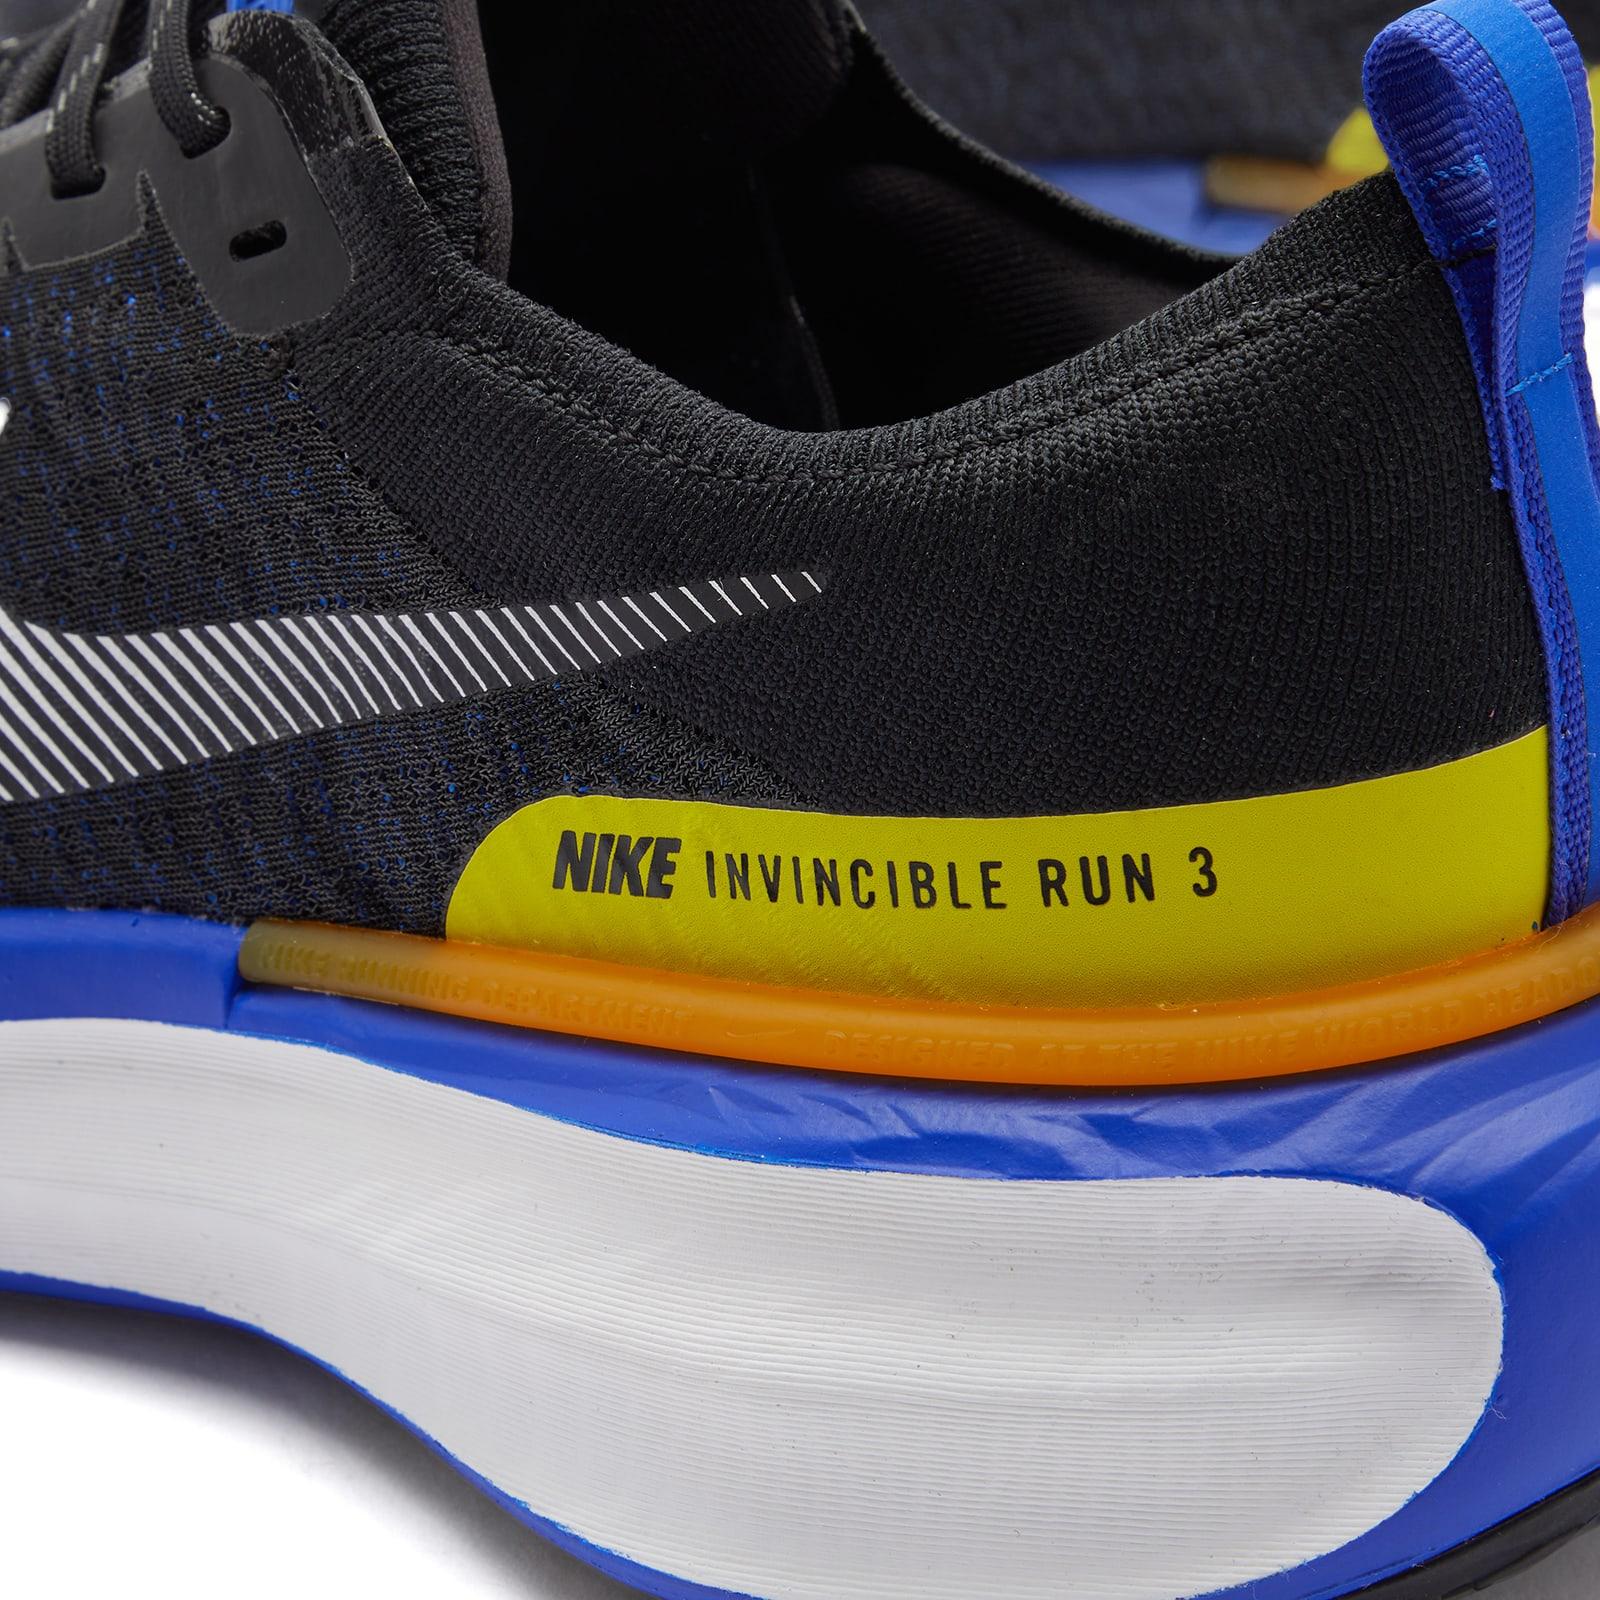 NIKE RUNNING Invincible Run 3 SE Rubber-Trimmed Flyknit Running Sneakers  for Men